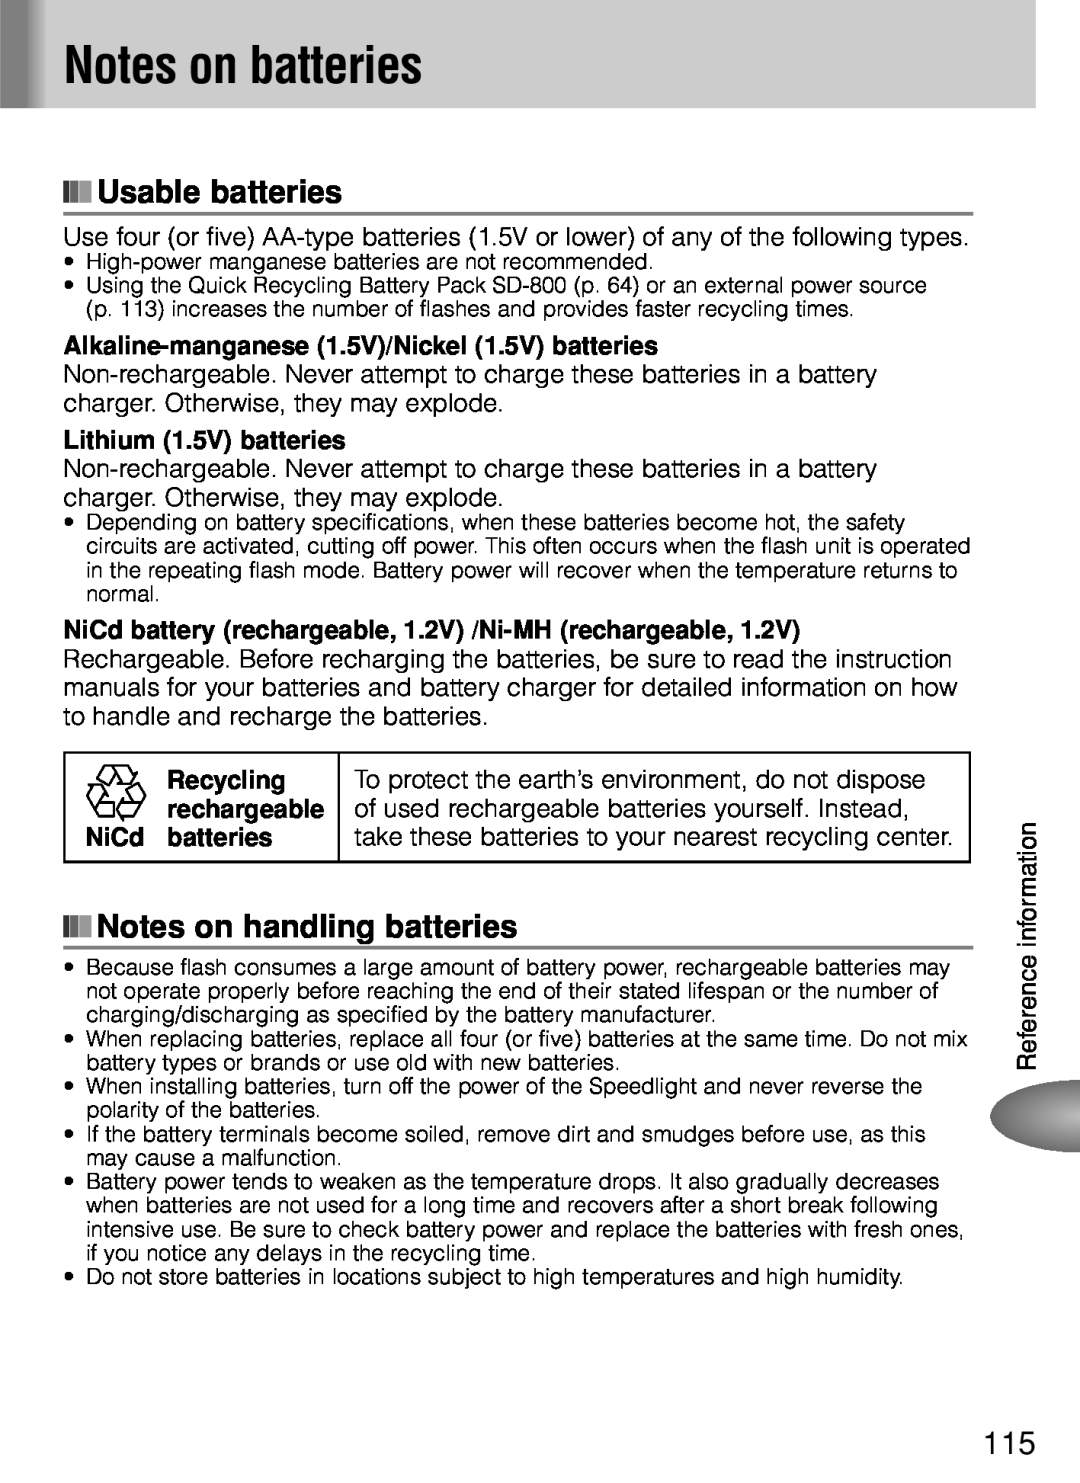 Nikon SB-800 Notes on batteries, Usable batteries, Notes on handling batteries, Lithium 1.5V batteries, Recycling 